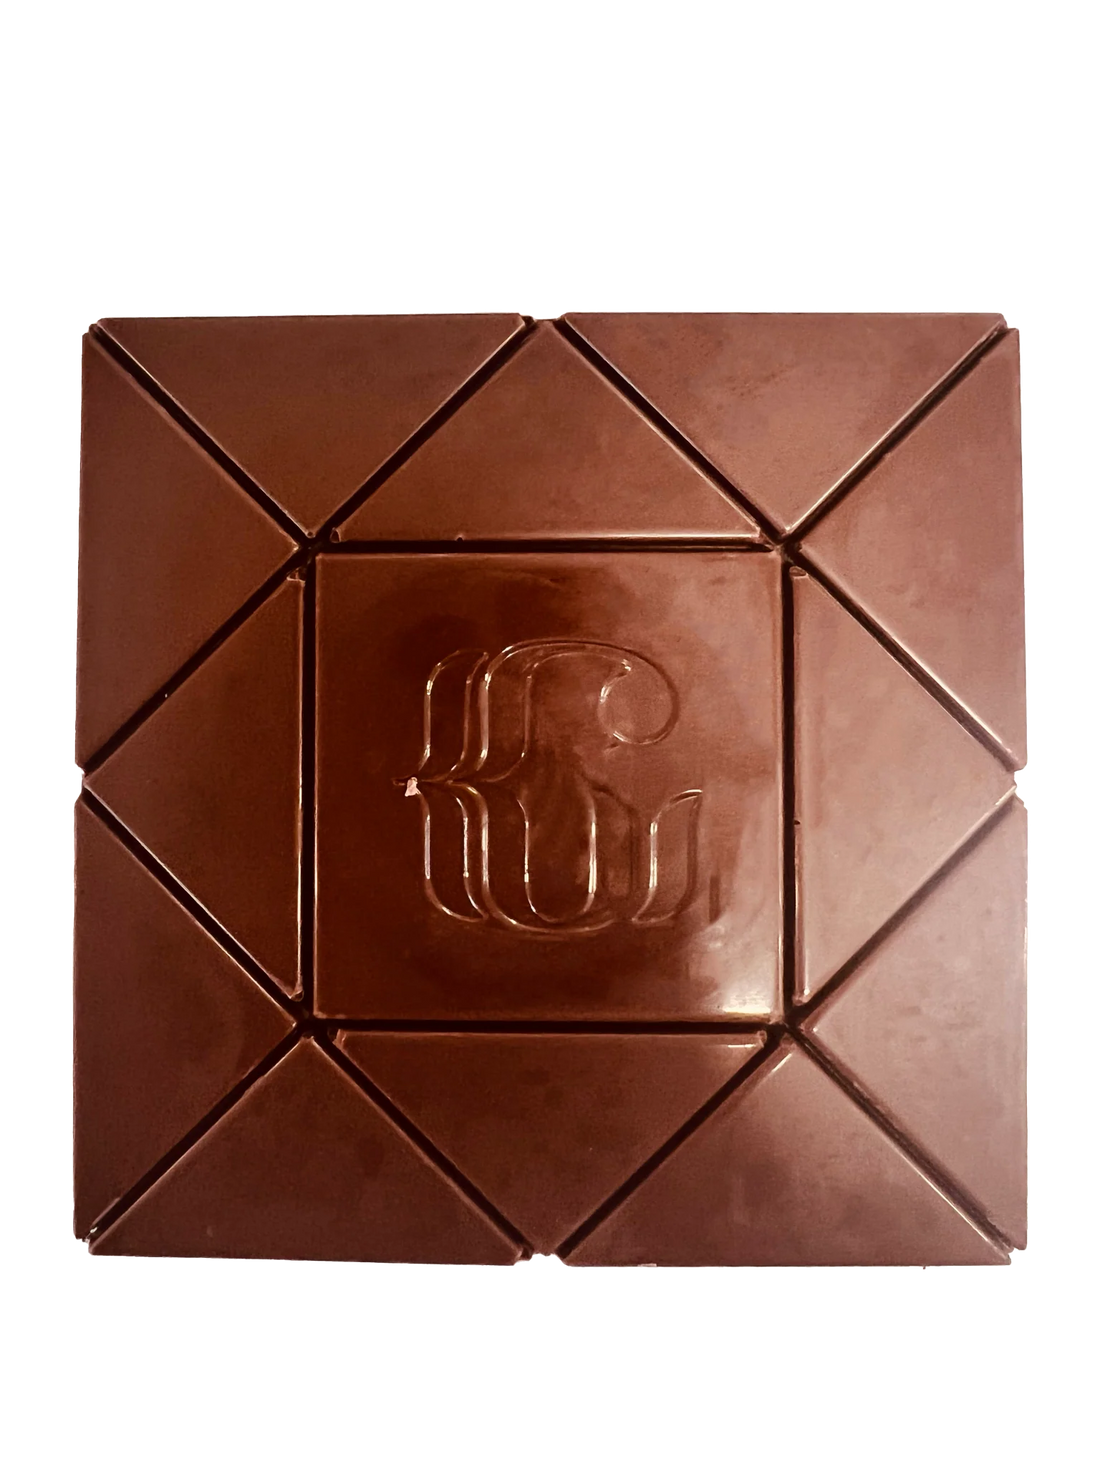 Goodio - 71% Dark Chocolate Bar